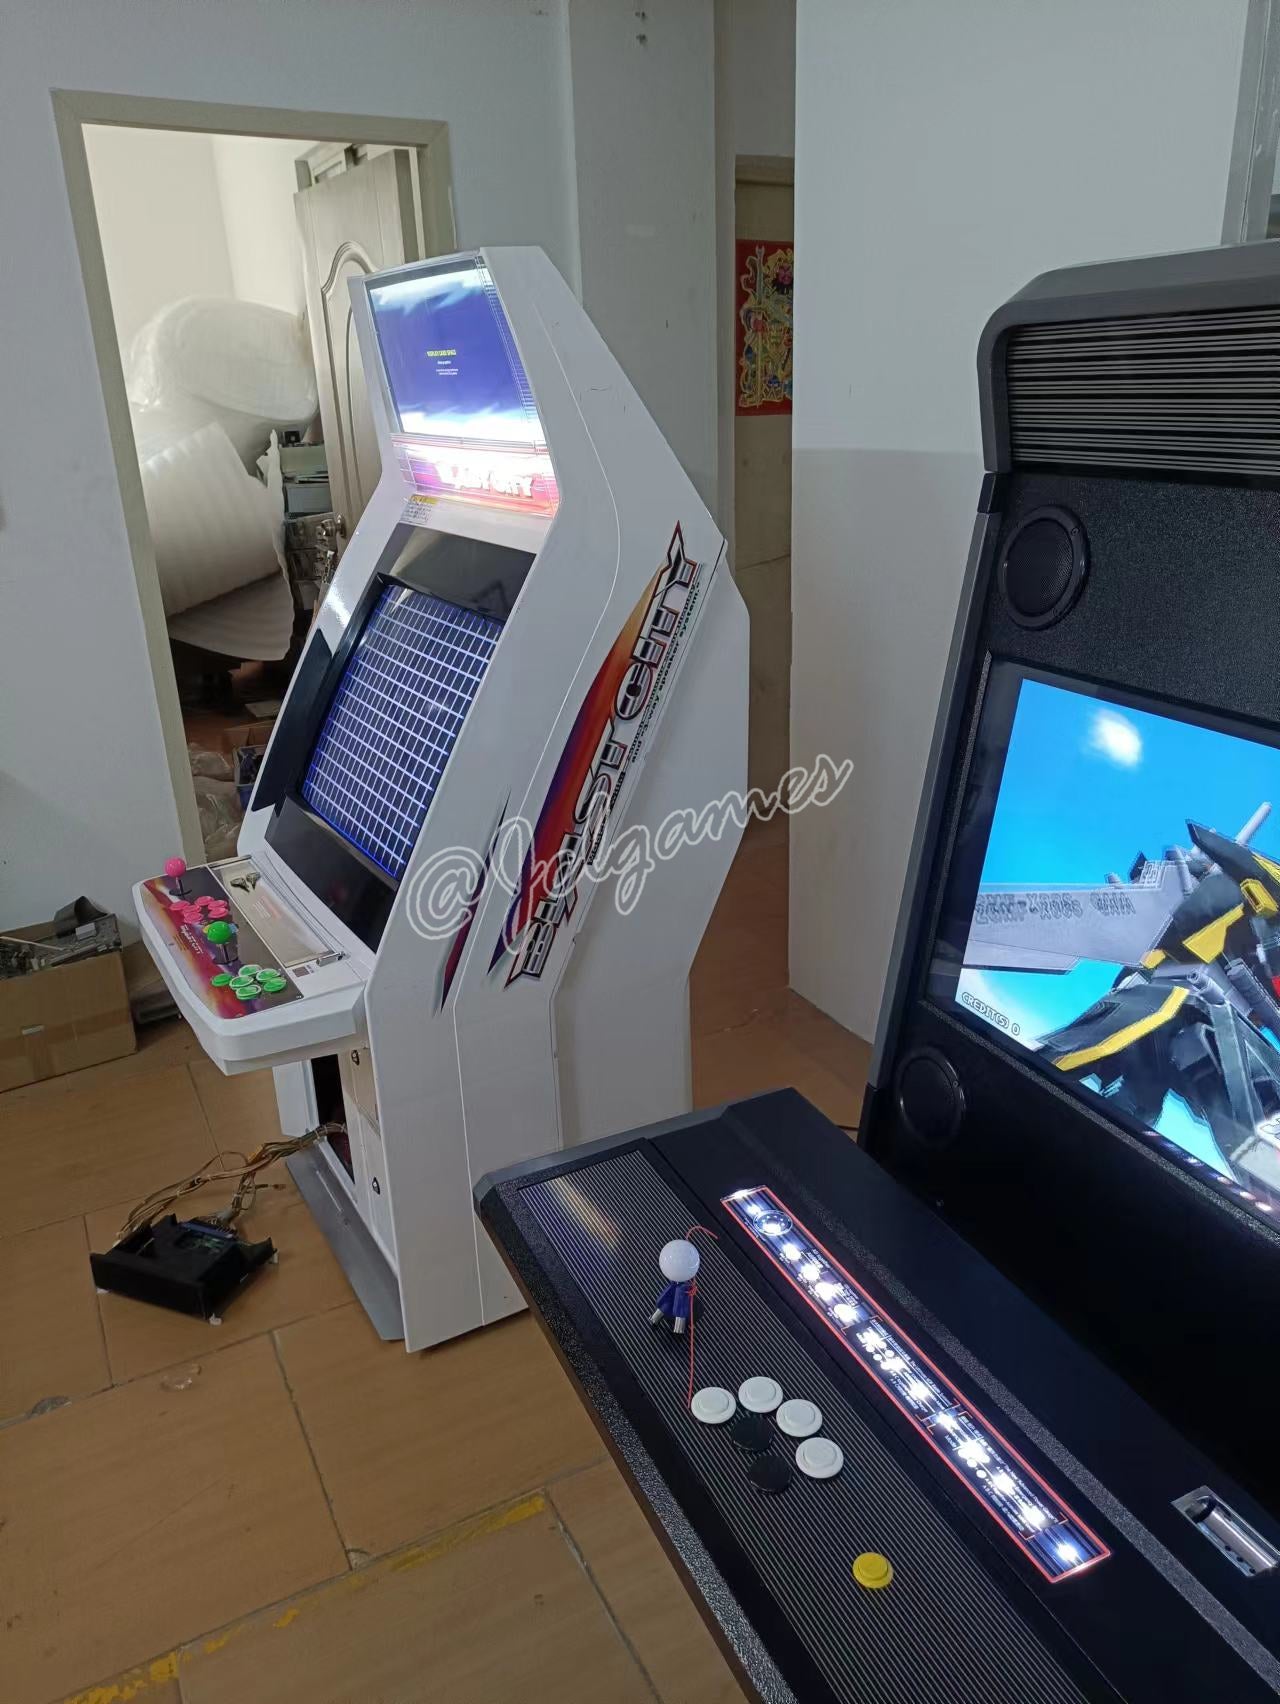 Buy Refurbished Sega Blast City Candy Arcade for Sale China JCl Games